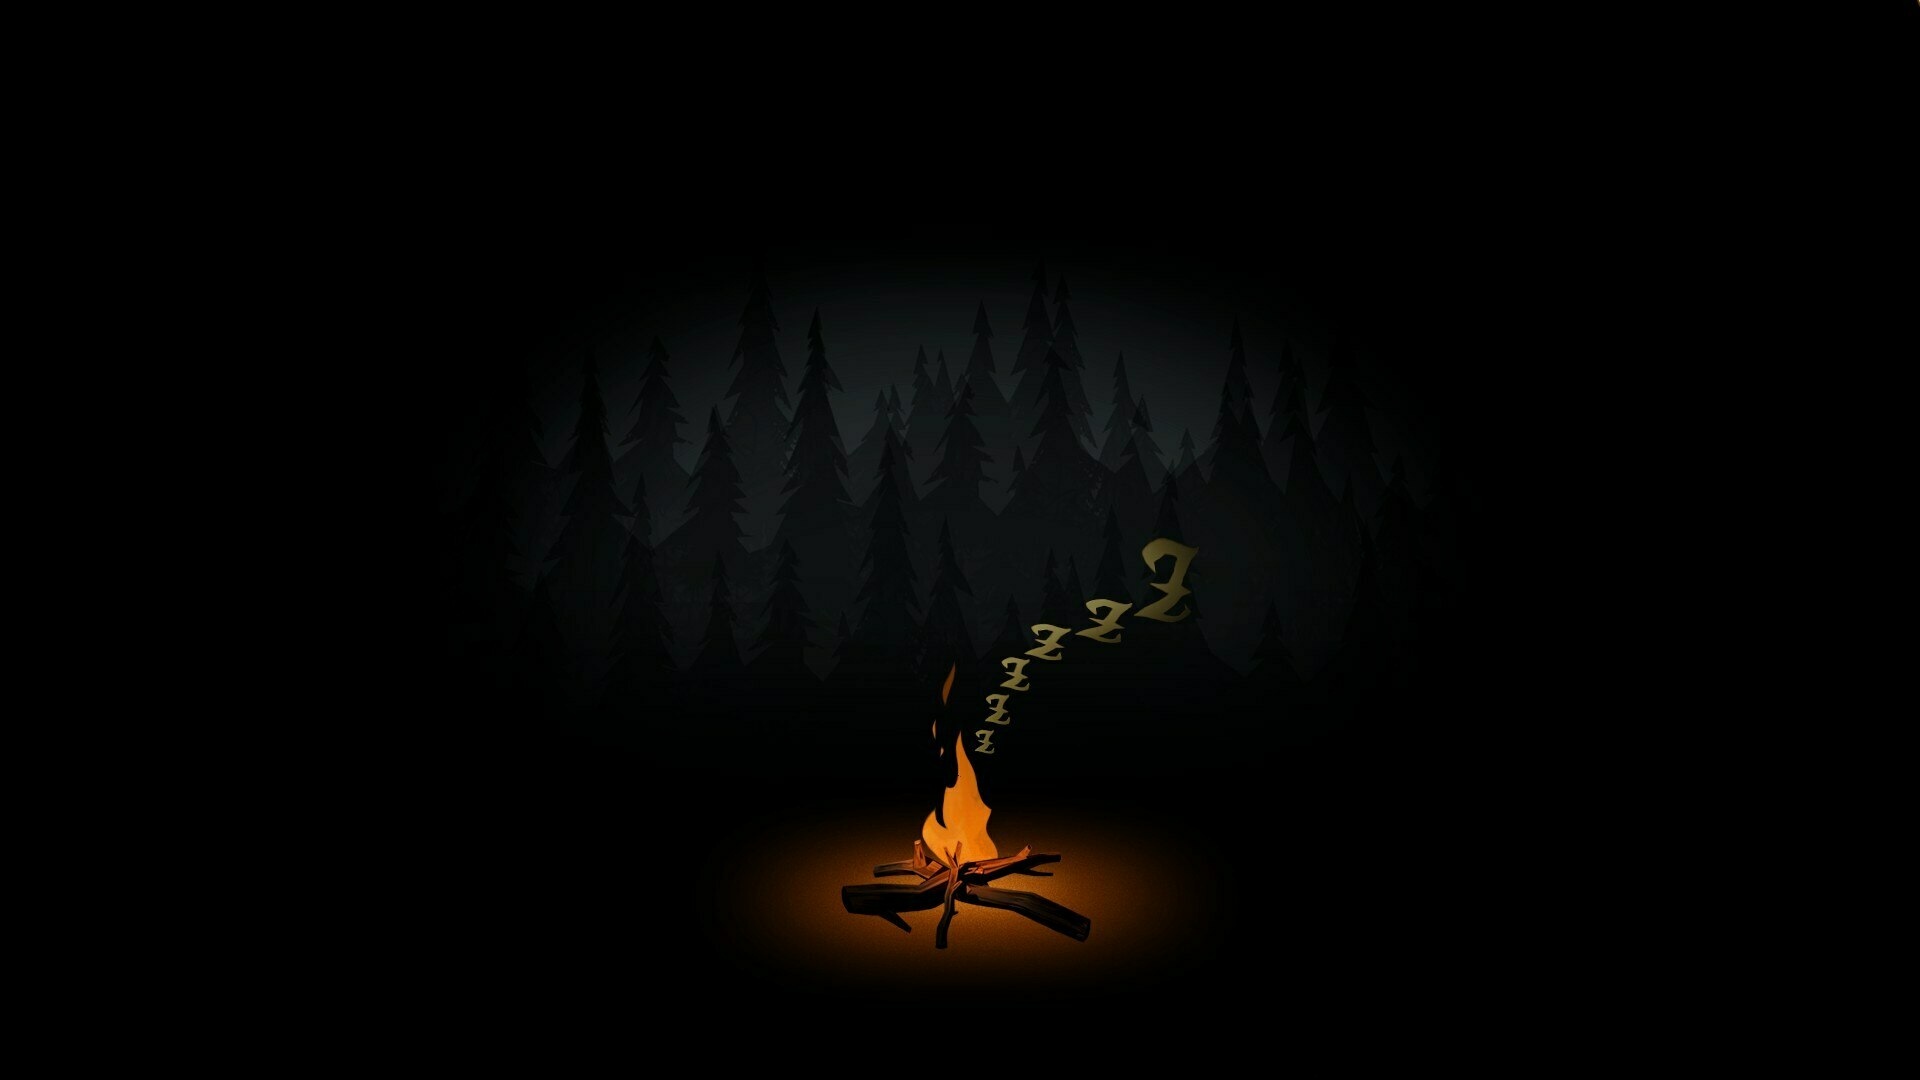 Wallpaper Campfire, the survial game, minimal